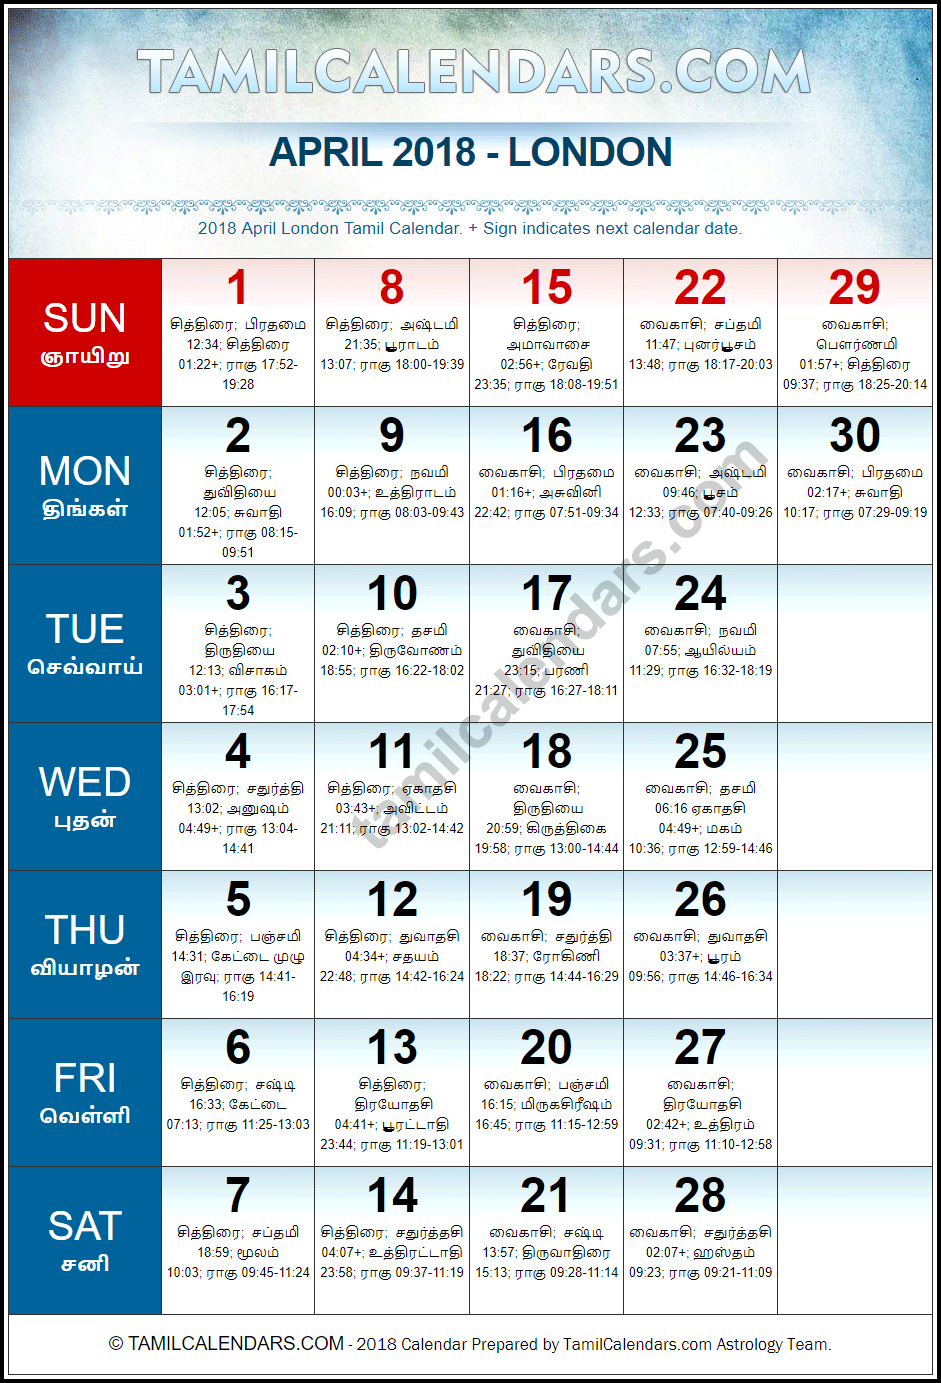 April 2018 Tamil Calendar for London, UK